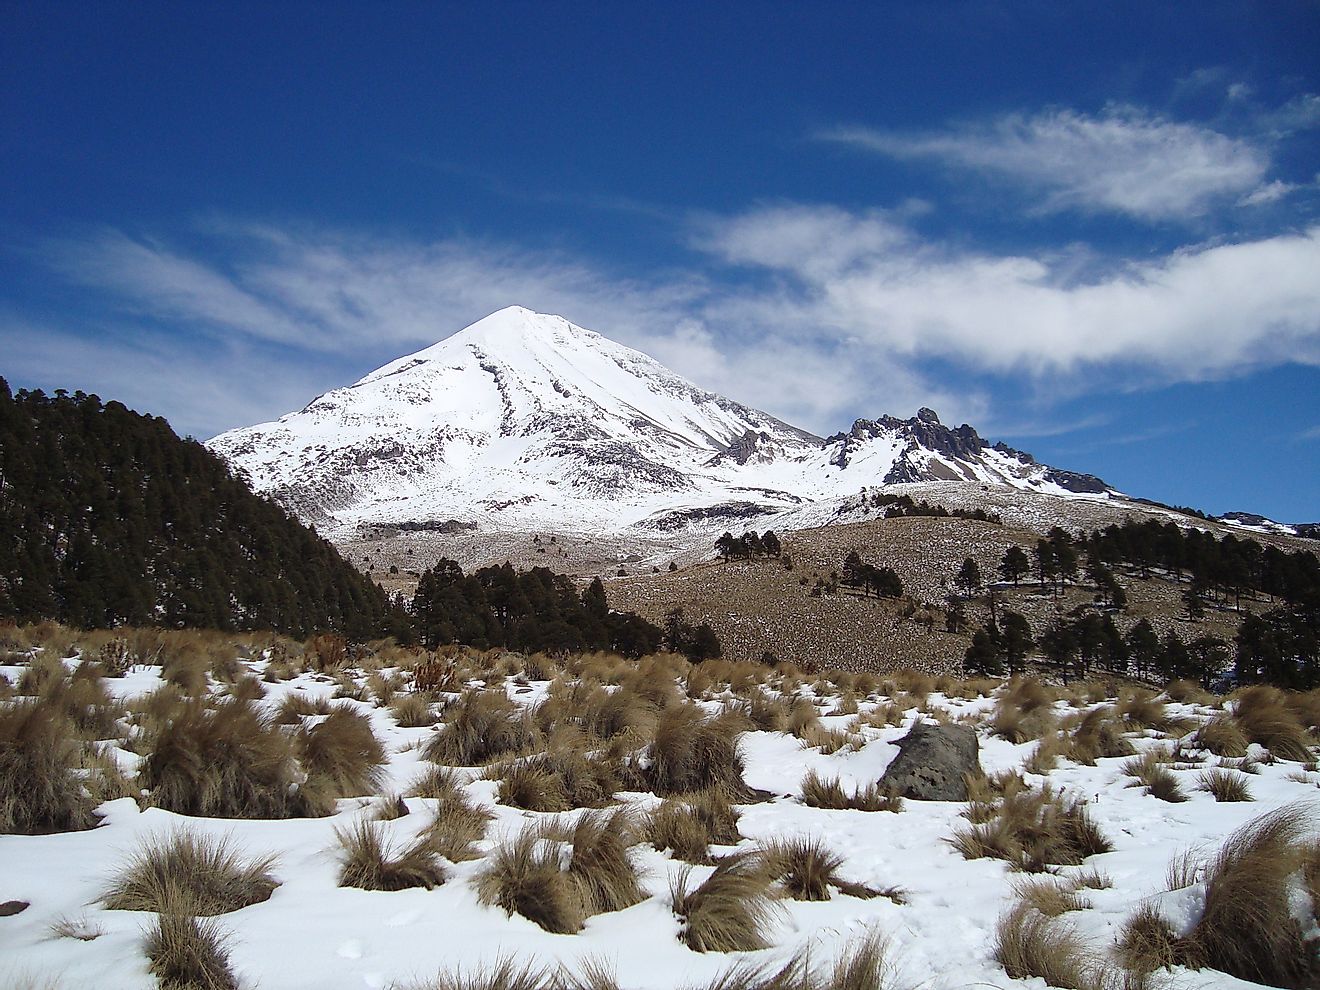 Citlaltepetl volcano of the Sierra Madre Oriental